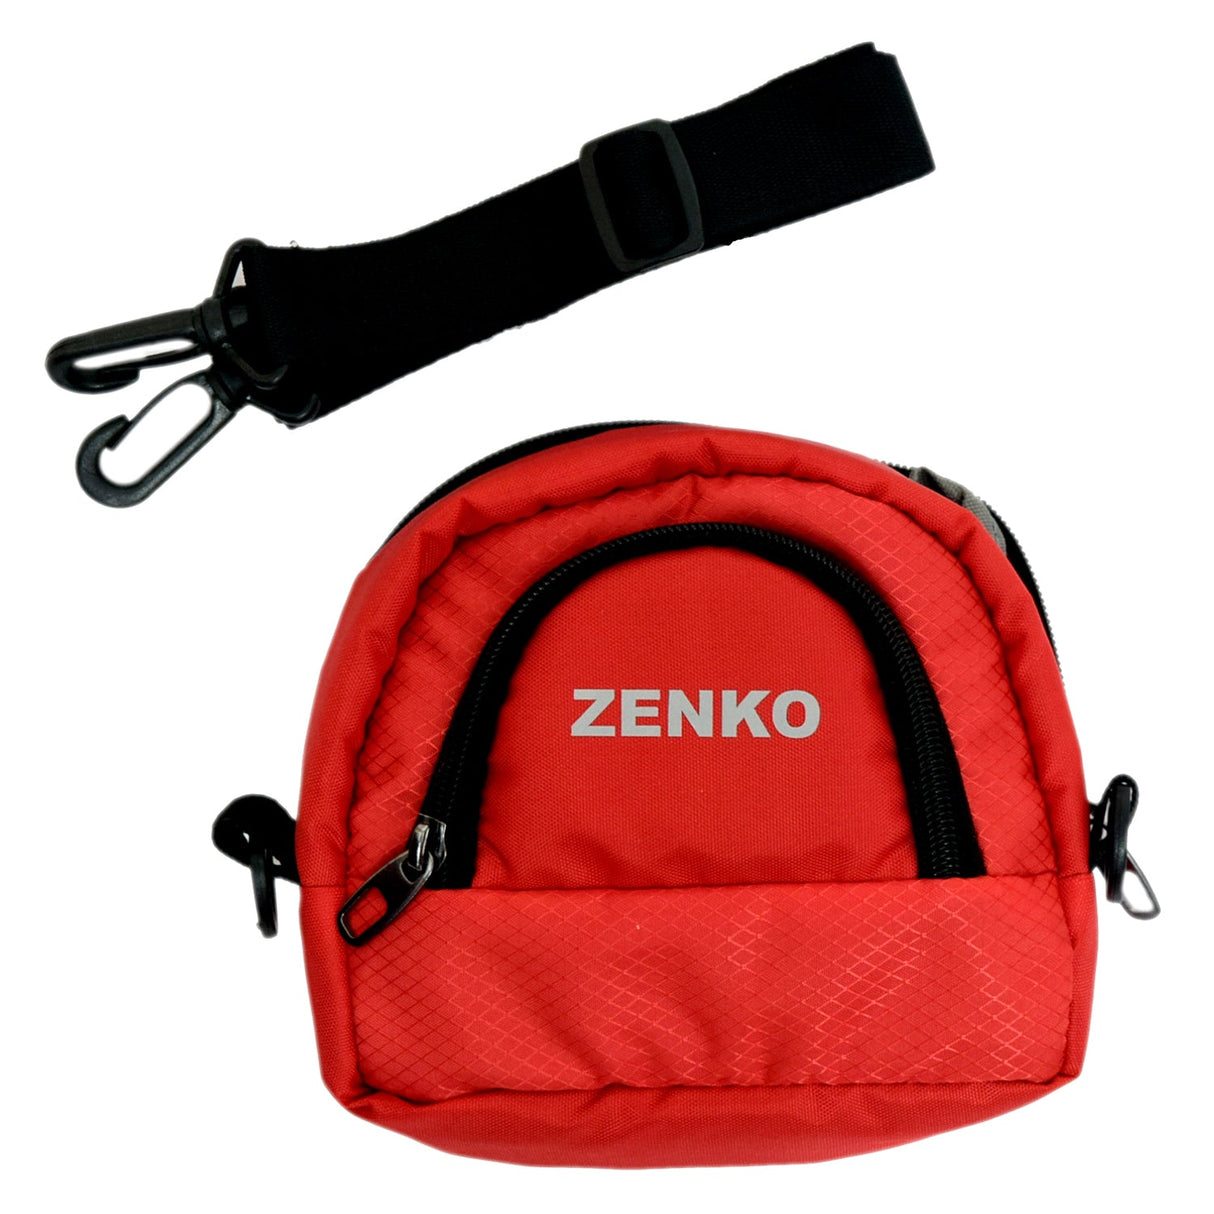 Zenko pouch for mini 8 instant camera bag Red